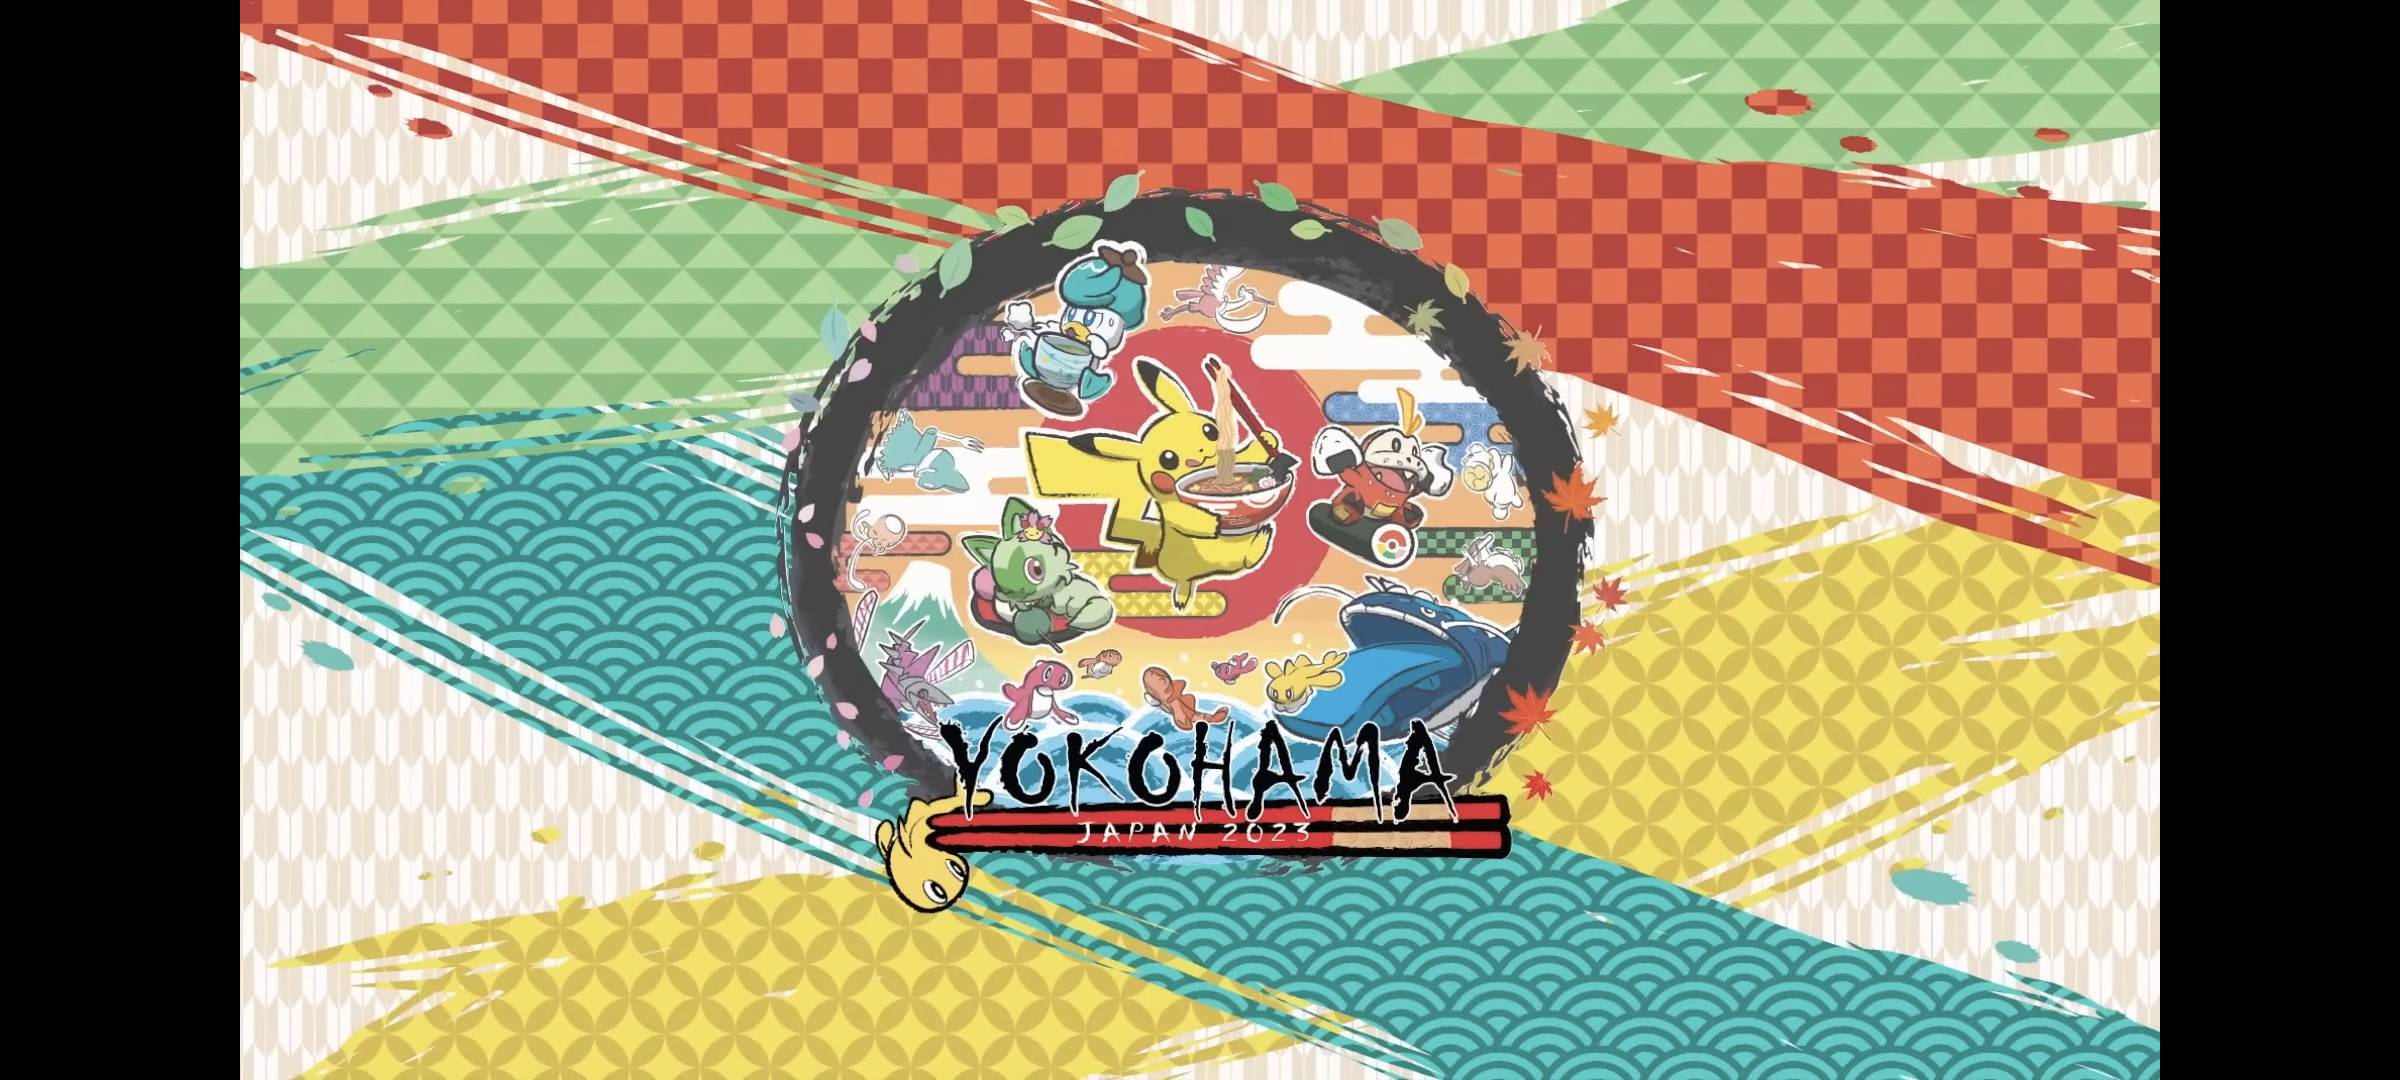 Pokemon yokohama world championships artwork